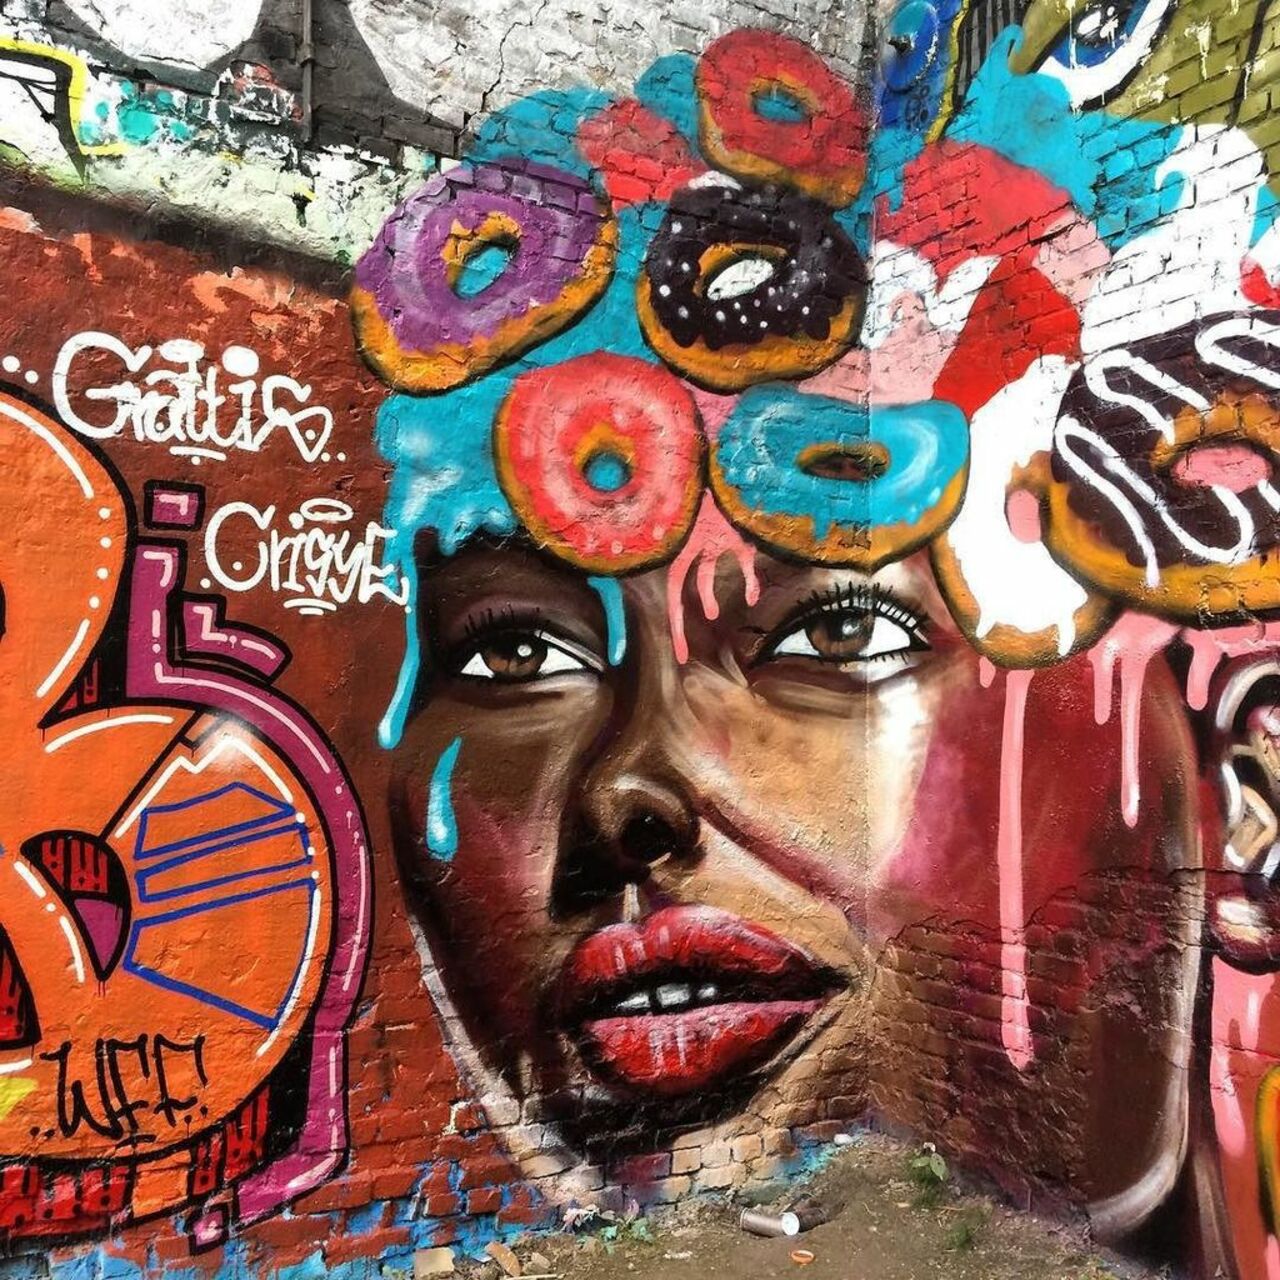 RT @StArtEverywhere: #hausmania #streetart #gatekunst #graffiti #streetartoslo #oslostreetart #karlekochaventyr #streetart_monaslillever… https://t.co/vu38saUIr1